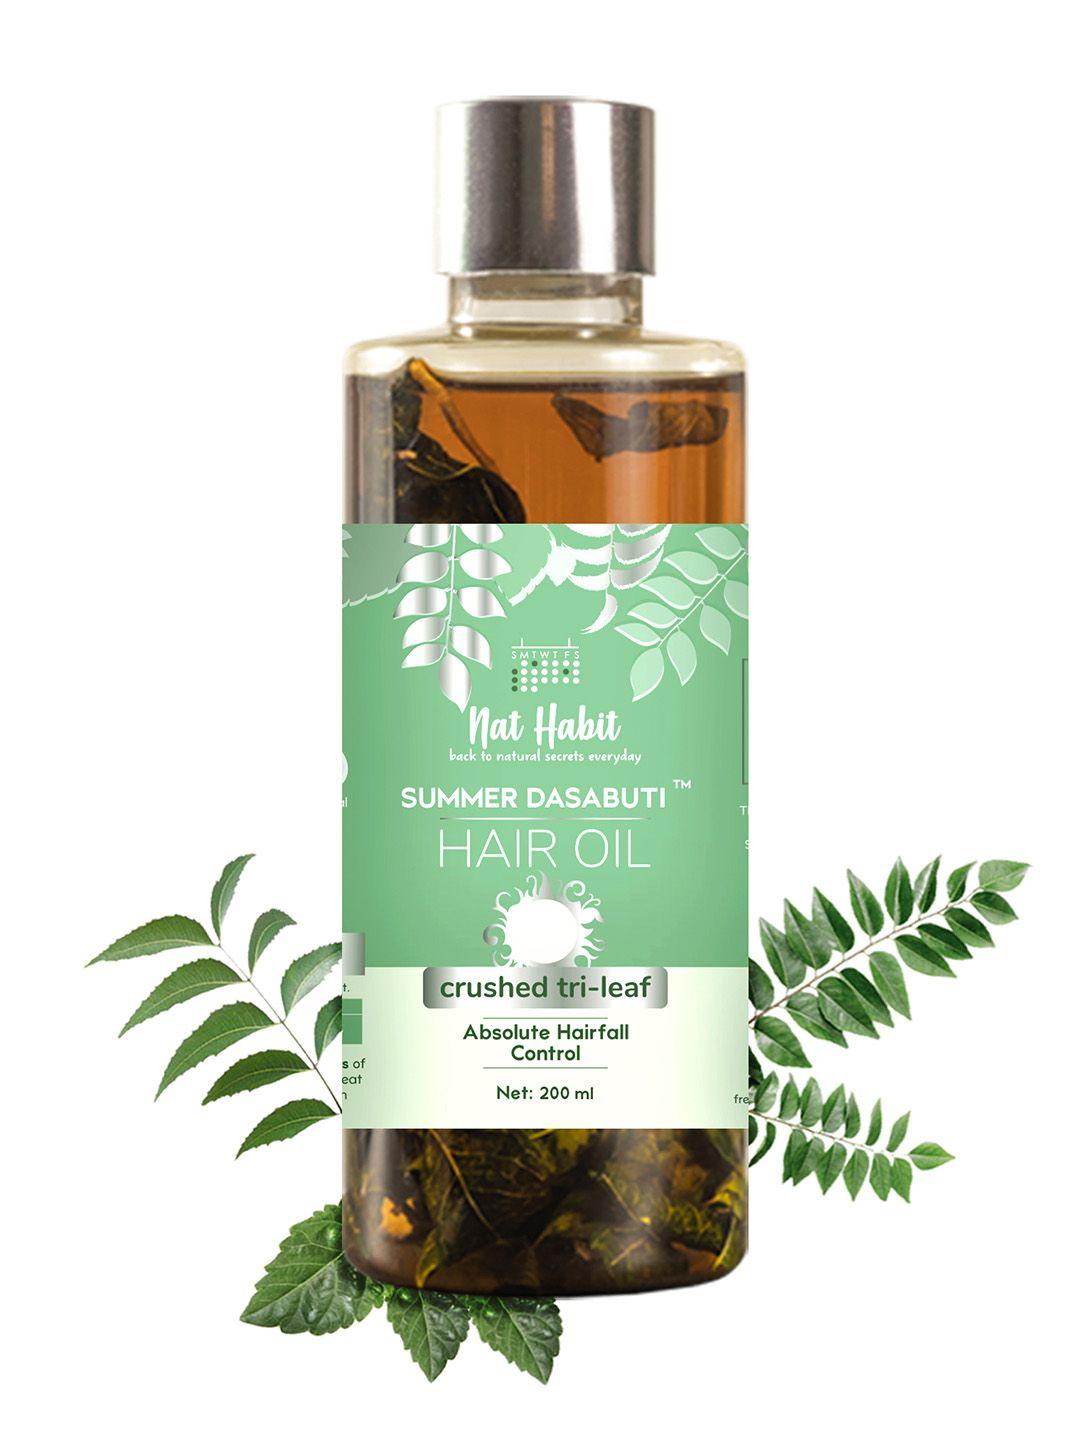 nat habit crushed tri-leaf summer dasabuti hair oil for absolute hairfall control - 200ml